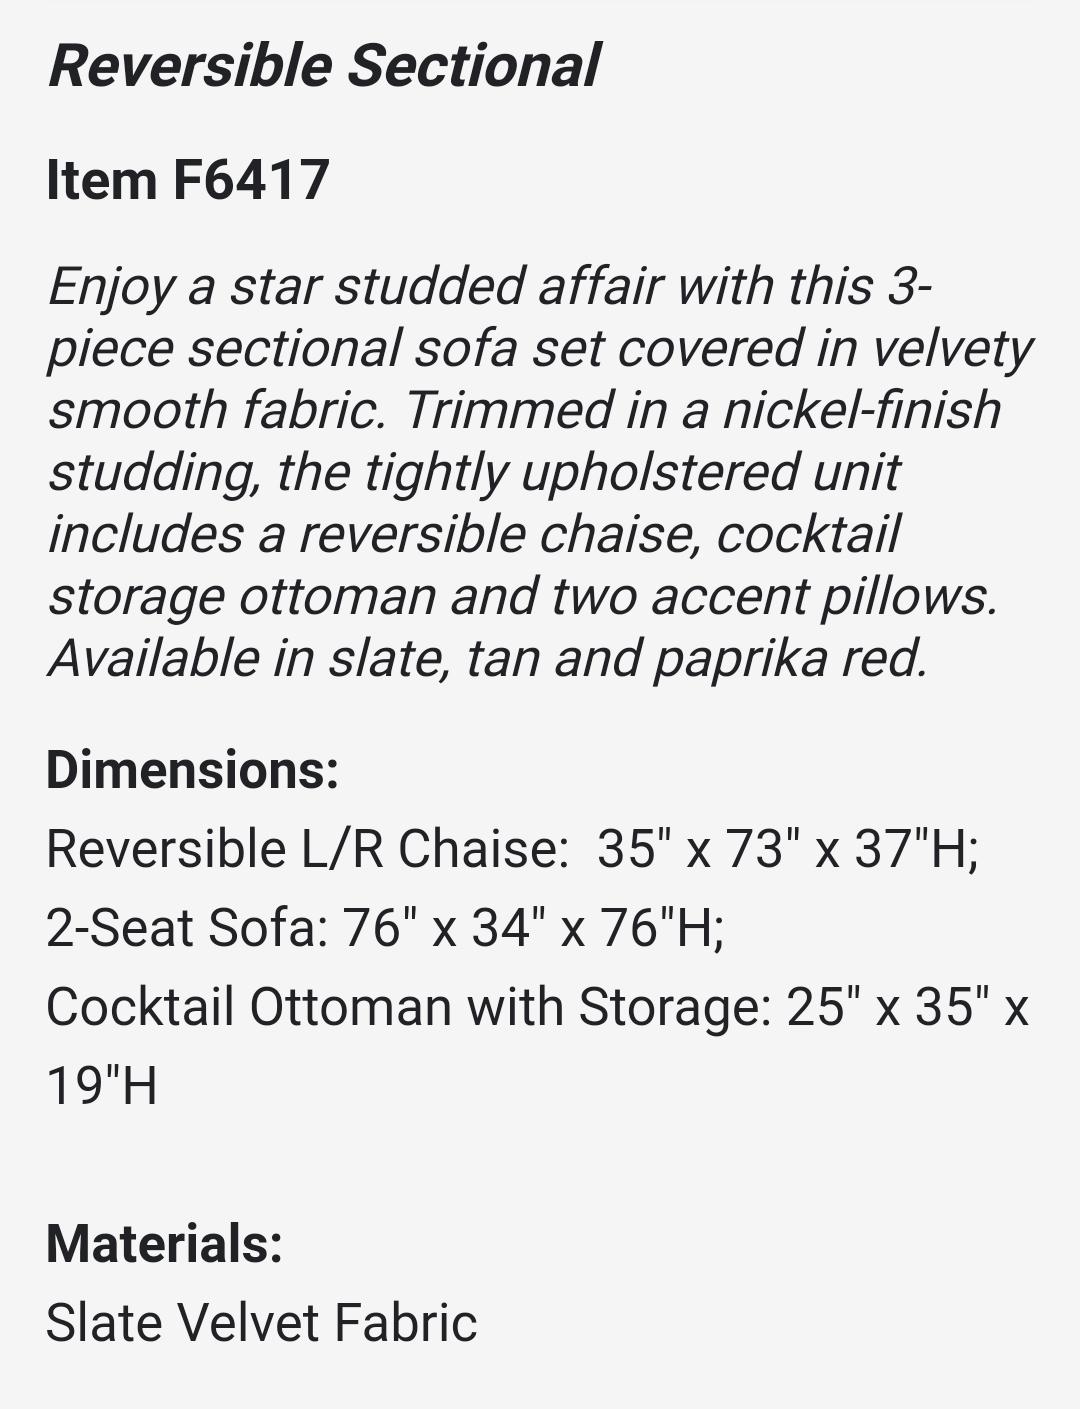 3 Piece Velvet Reversible Sectional Sofa 3 Colors Grey, Tan,  Red 6417,Boss